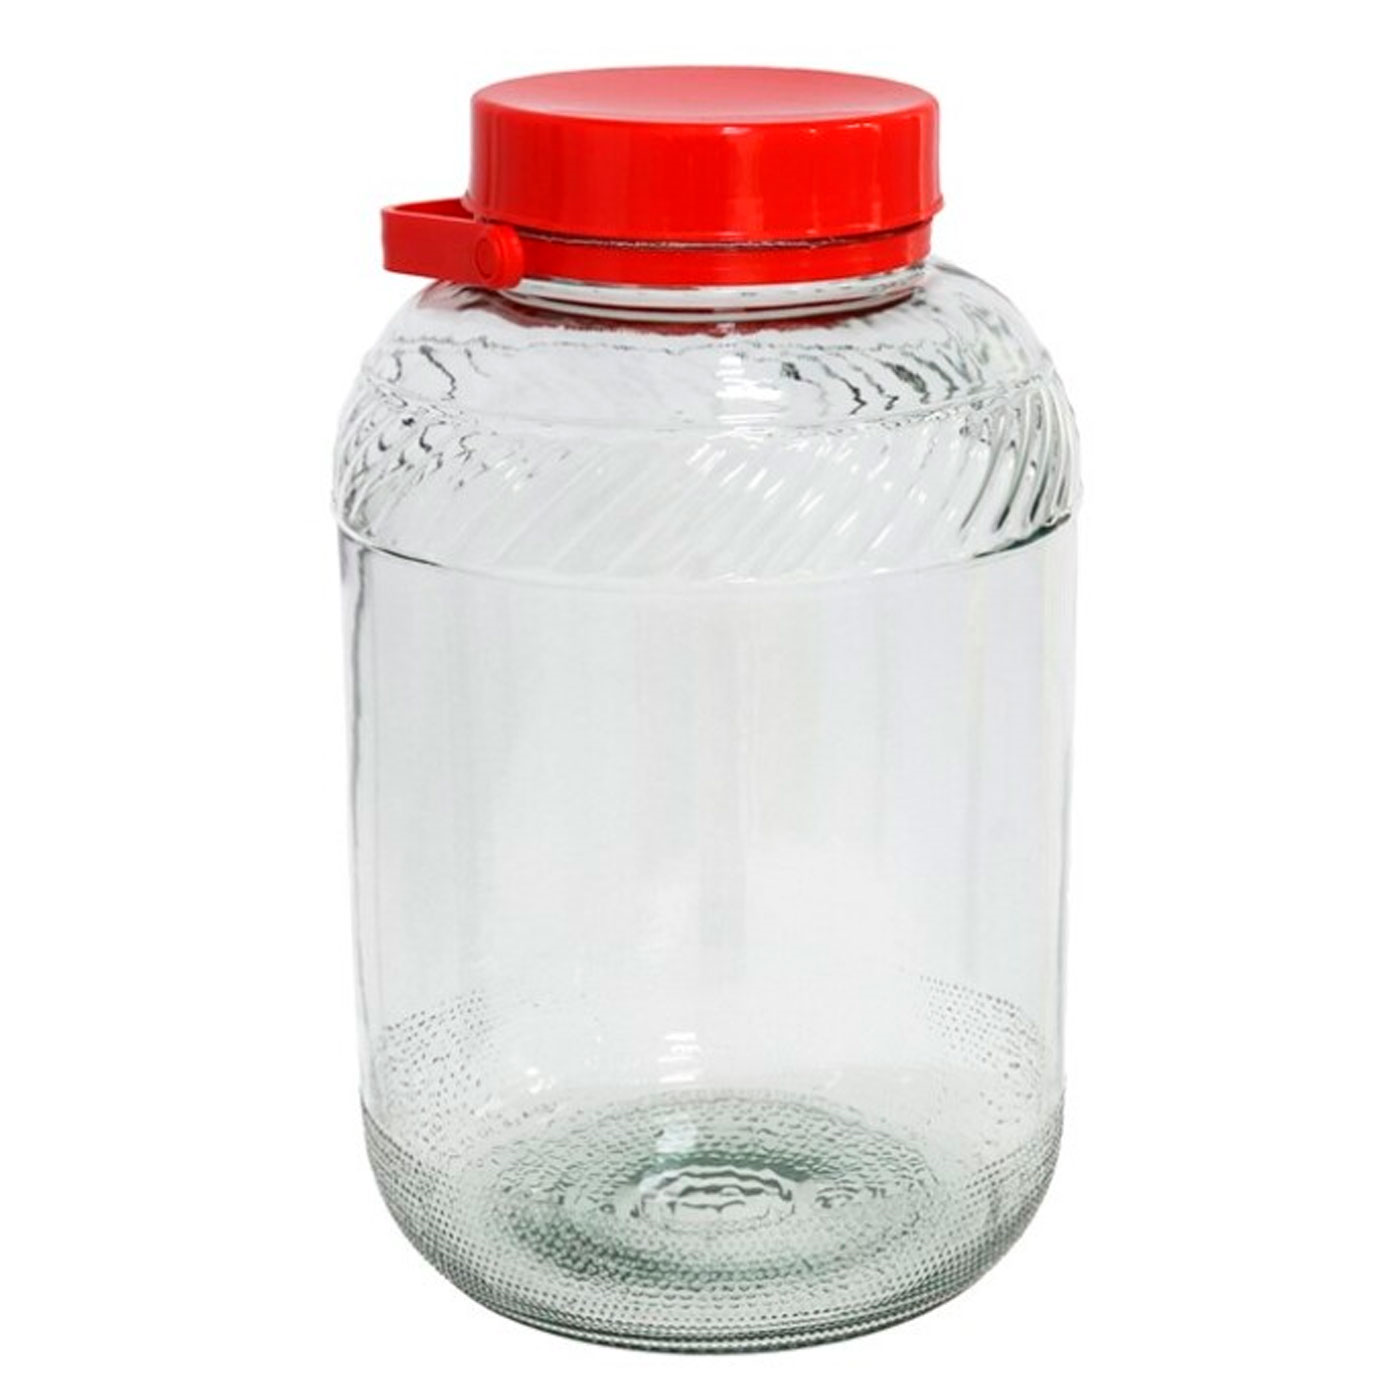 Tarro dispensador de bebidas de plástico con tapa y grifo de 8 litros.  Botella con grifo, garrafa, 32 x 15 cm